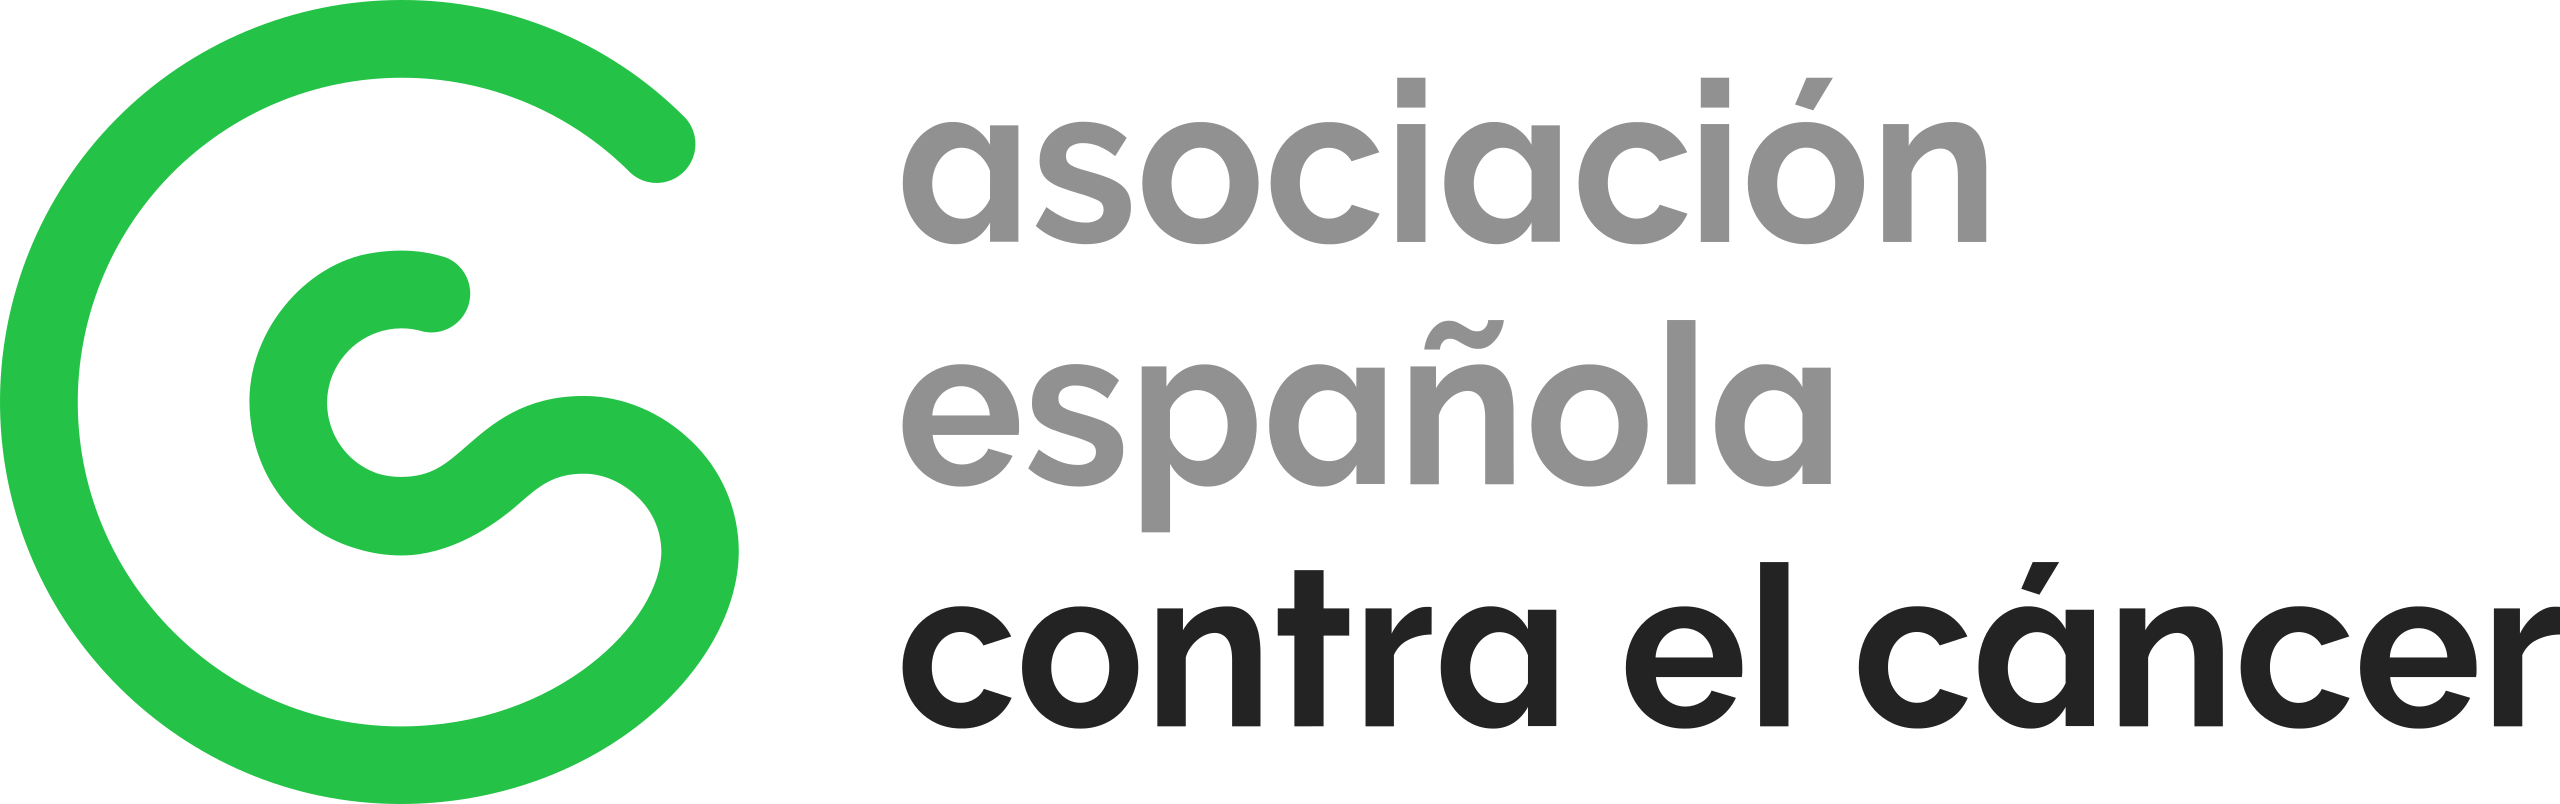 logo asociación española contra el cáncer aecc